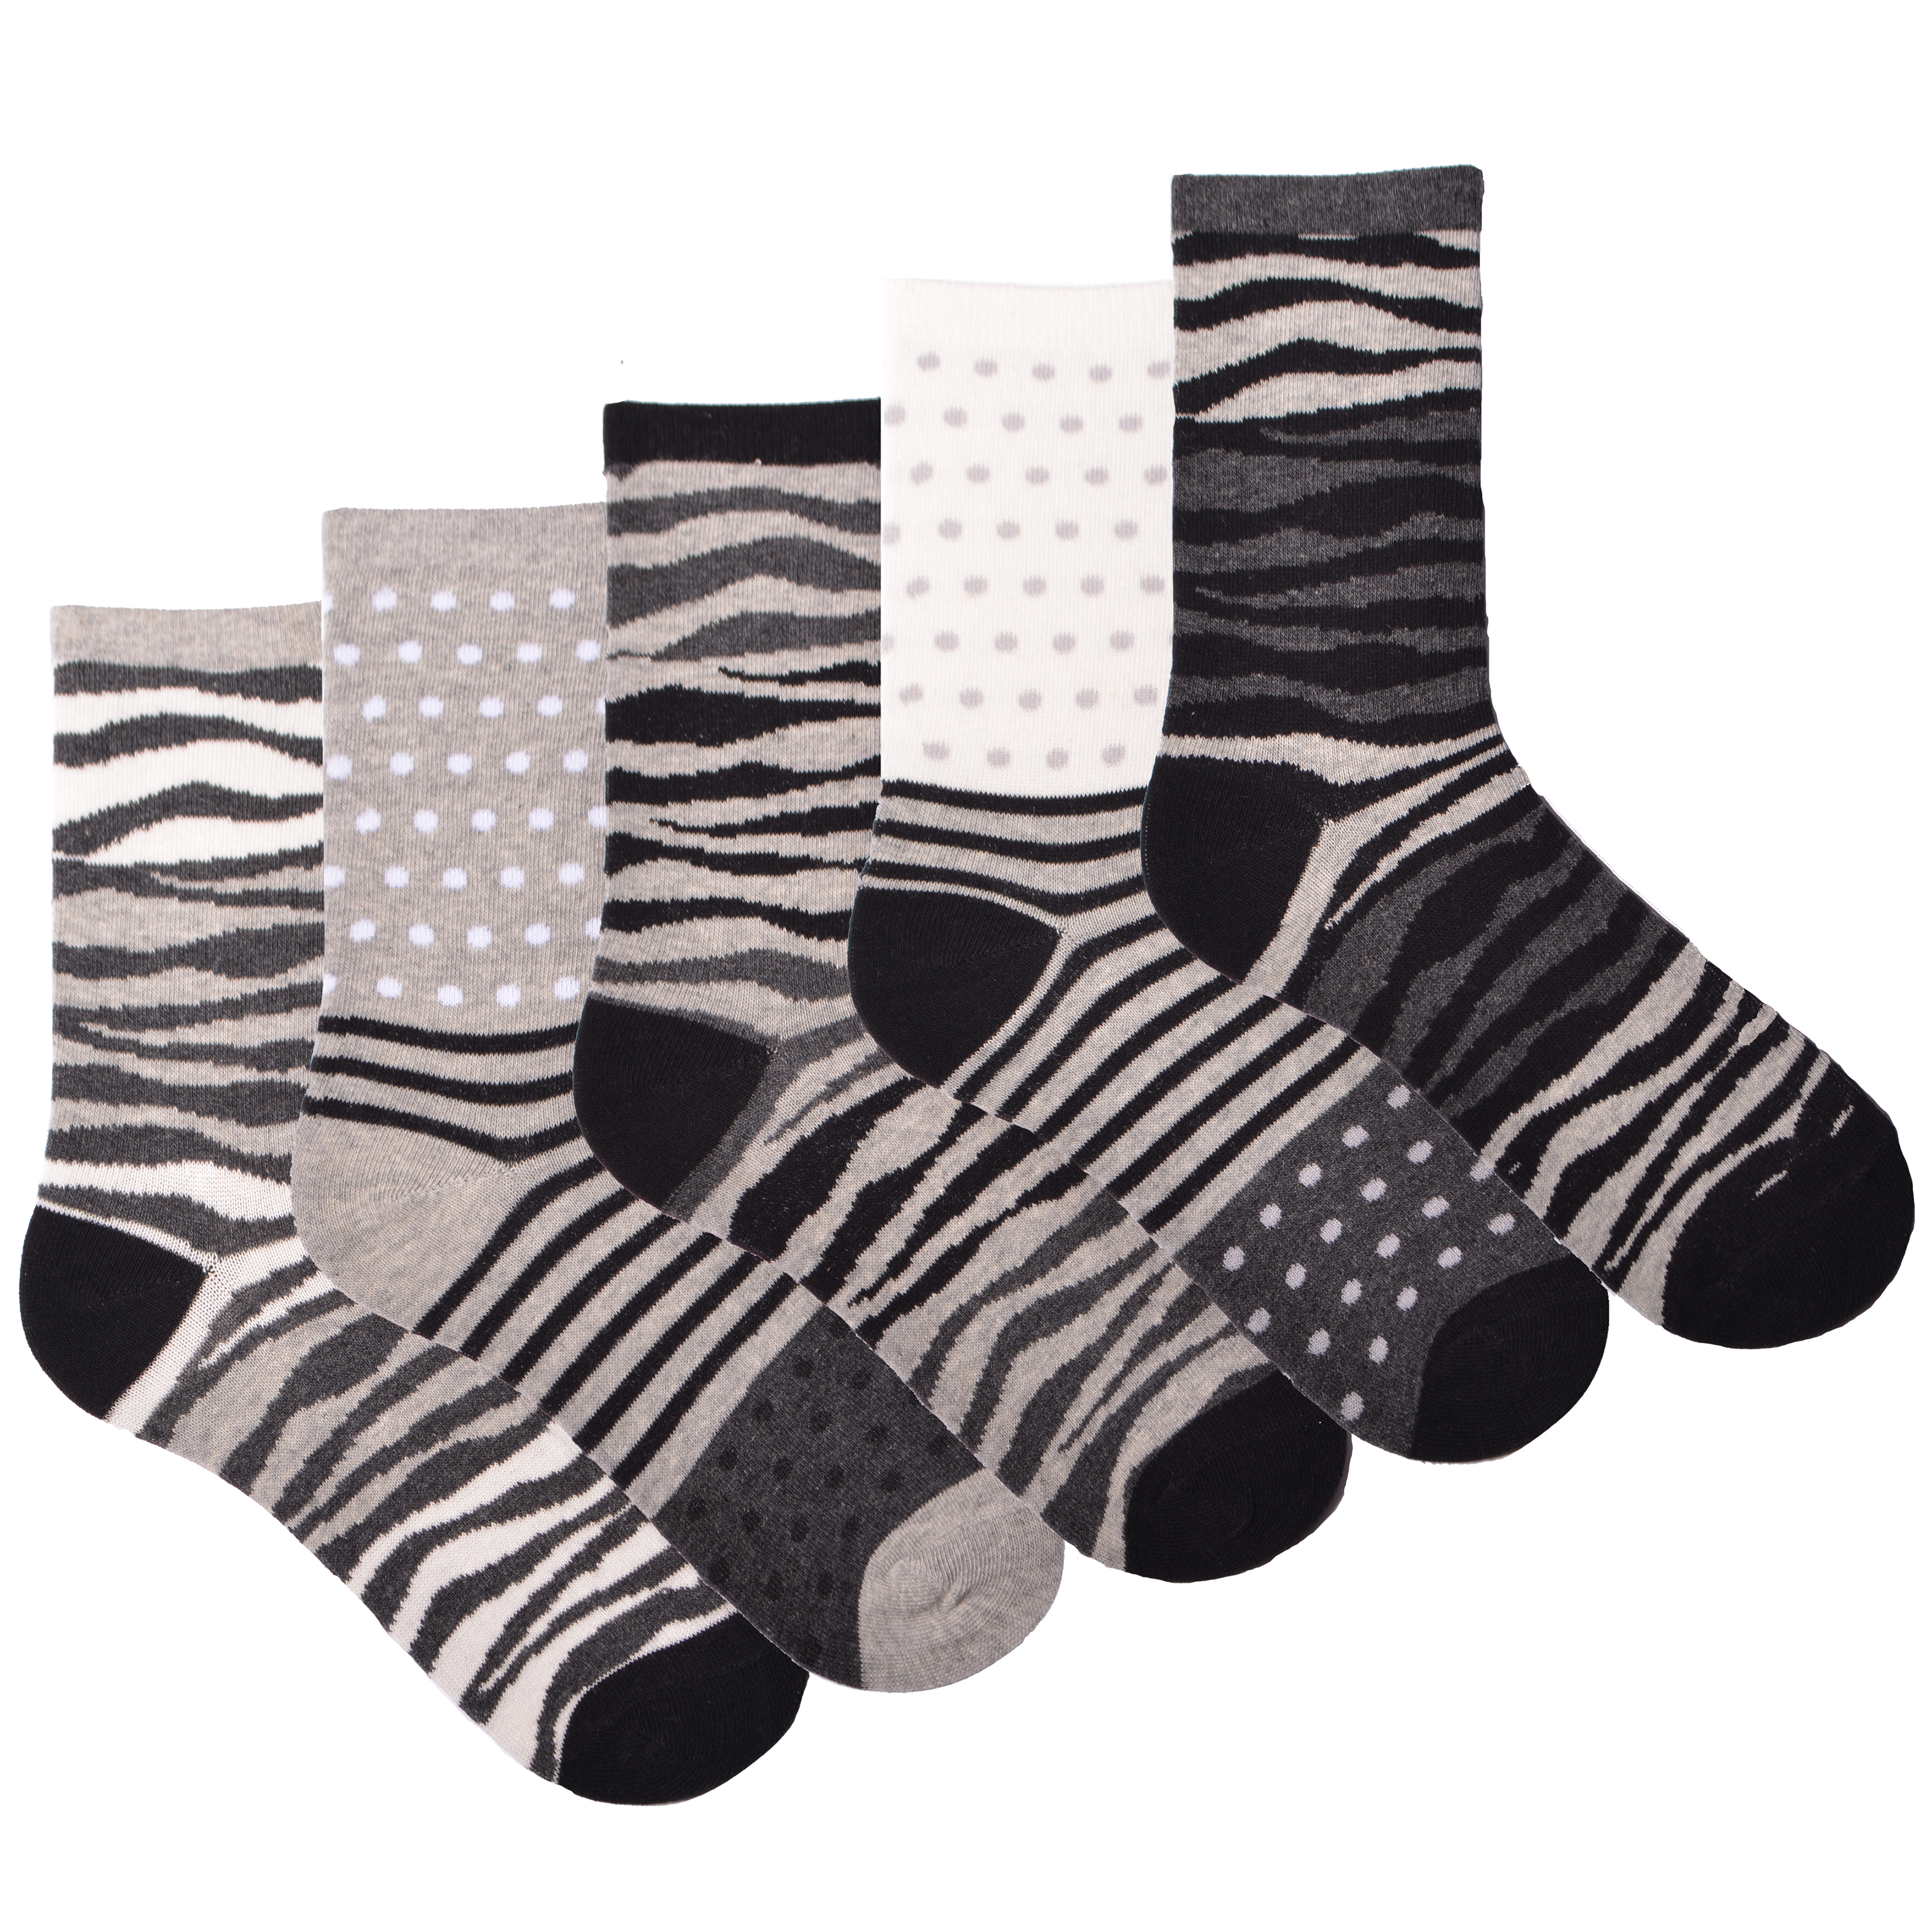 Ladies 5 Pack Socks Design Polka Dots Dog Black Pink Stripe Cotton Rich Size 4-8